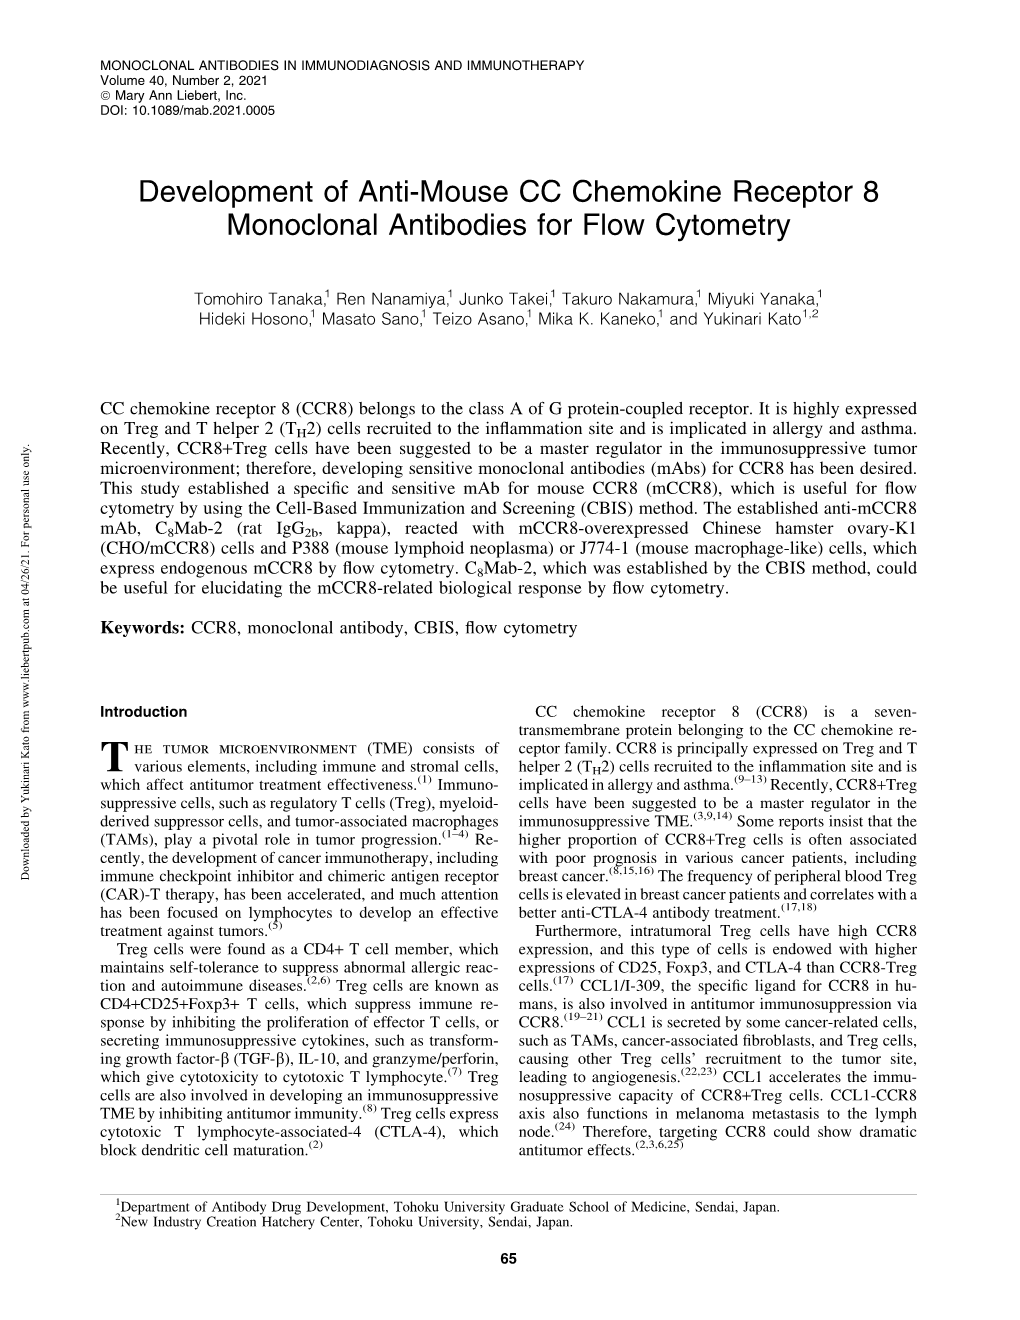 Development of Anti-Mouse CC Chemokine Receptor 8 Monoclonal Antibodies for Flow Cytometry